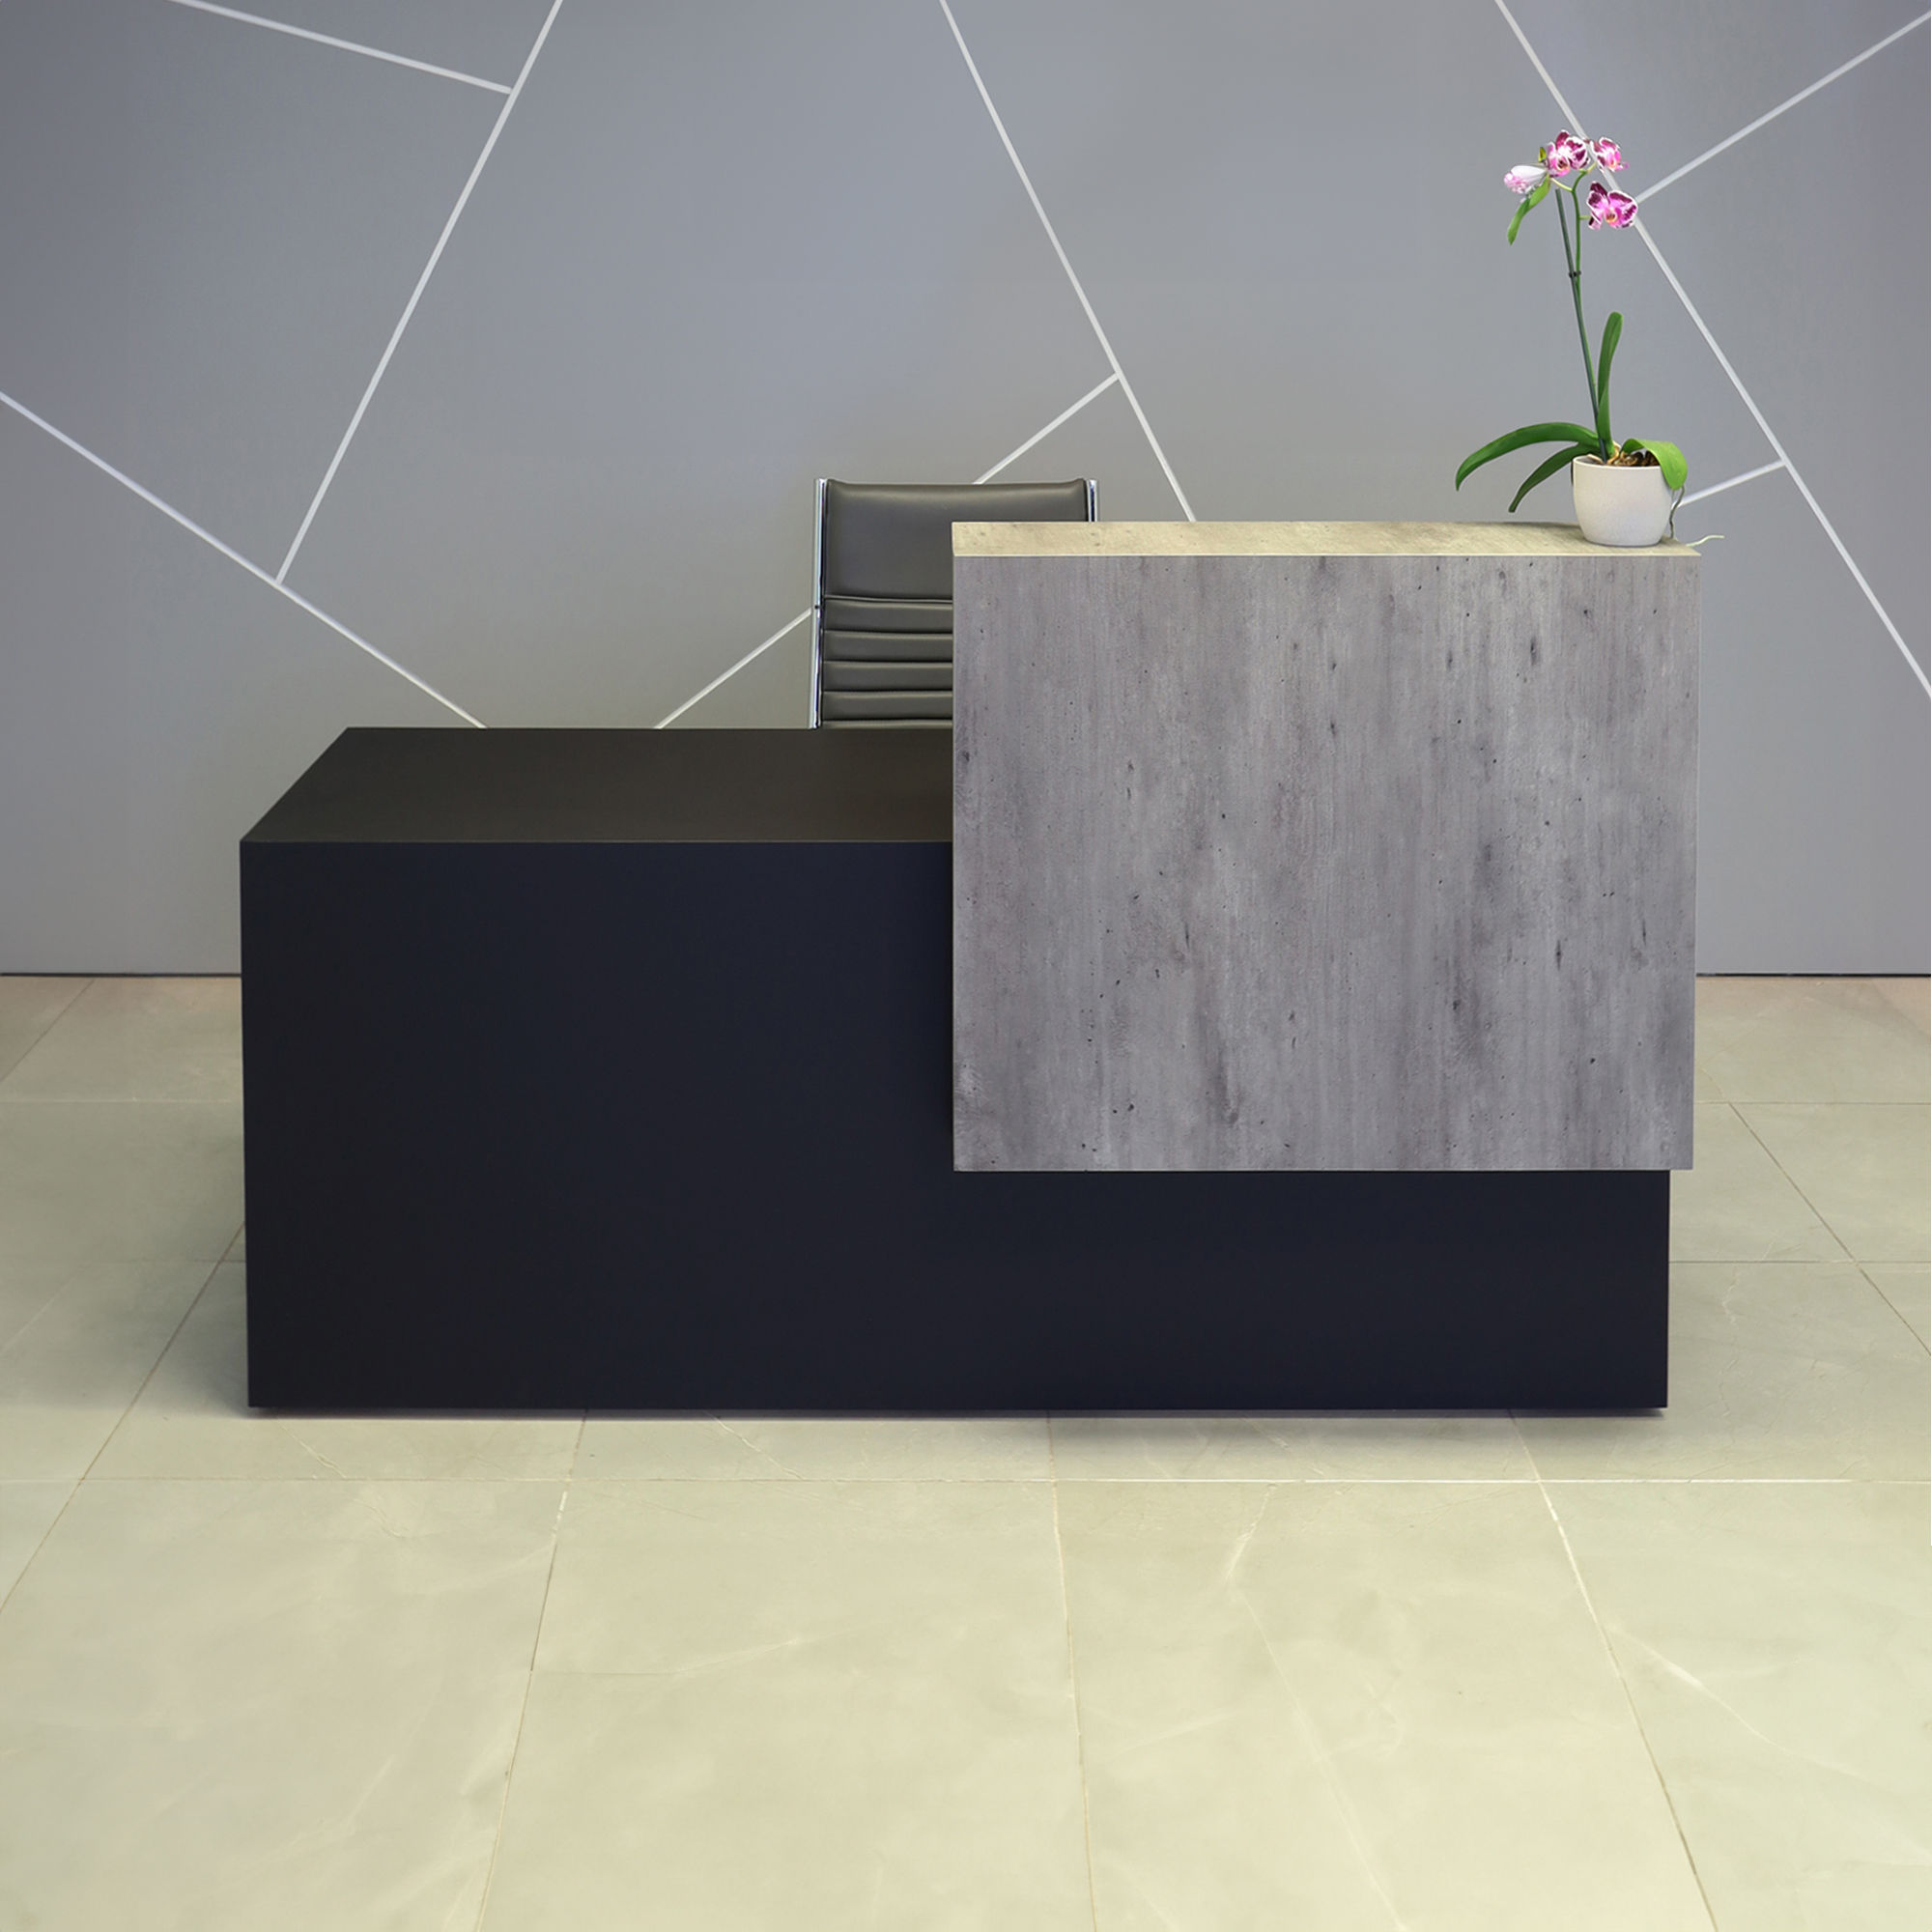 60-inch Los Angeles Custom Reception Desk in metropolitan concrete PVC laminate counter and black traceless laminate desk, shown here. 